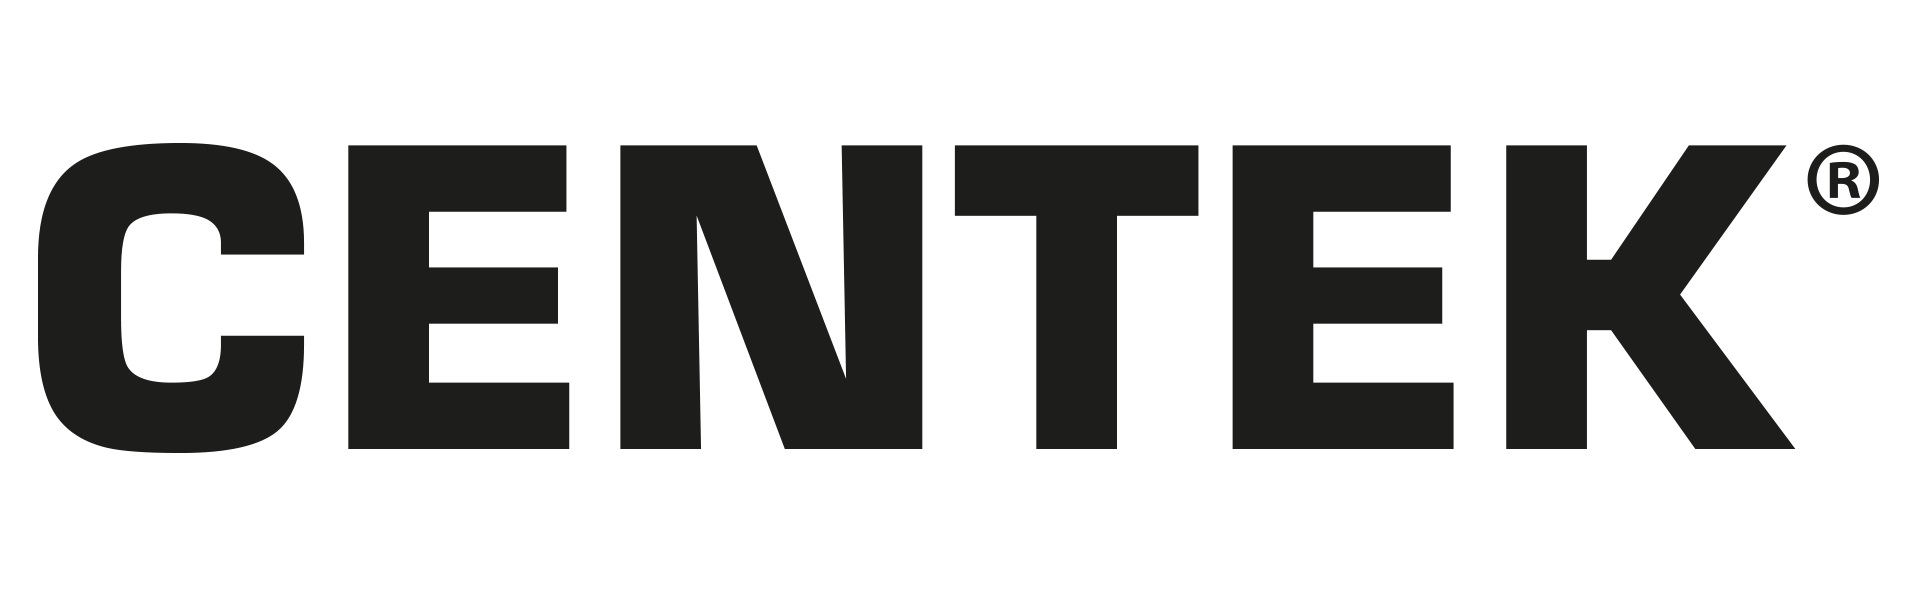 Логотип бренда Centek